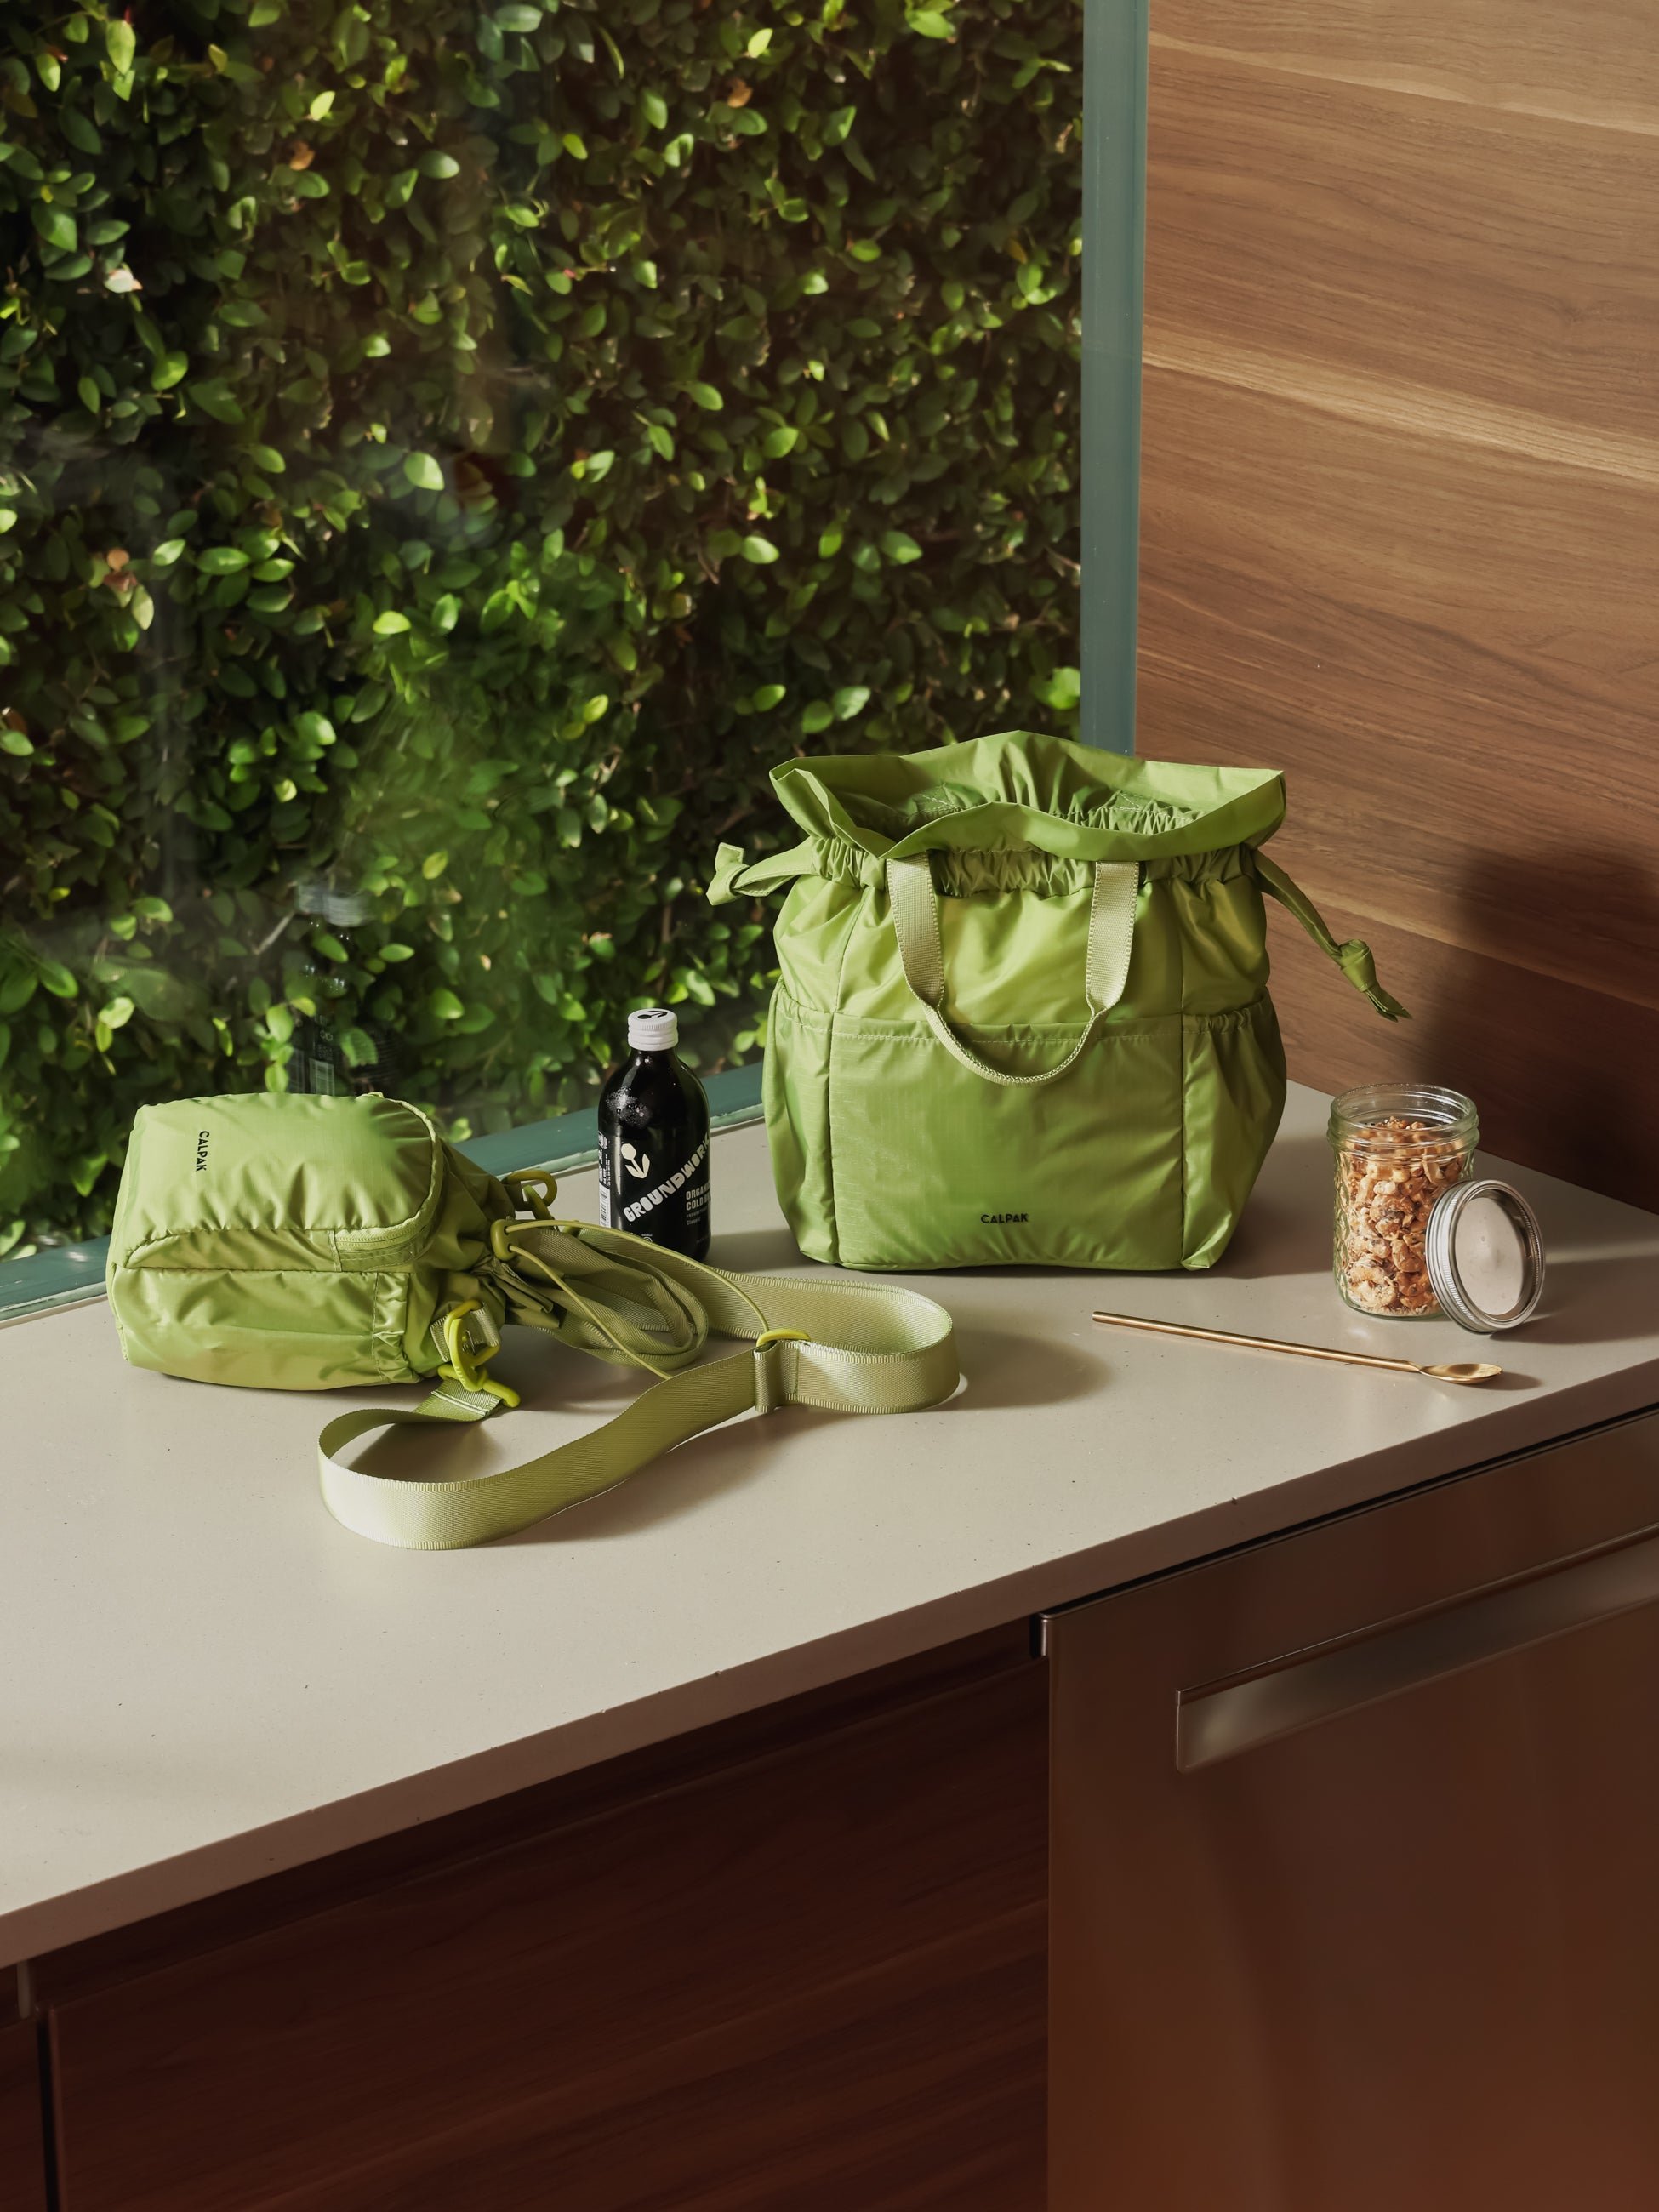 CALPAK Insulated Lunch Bag for women in light green